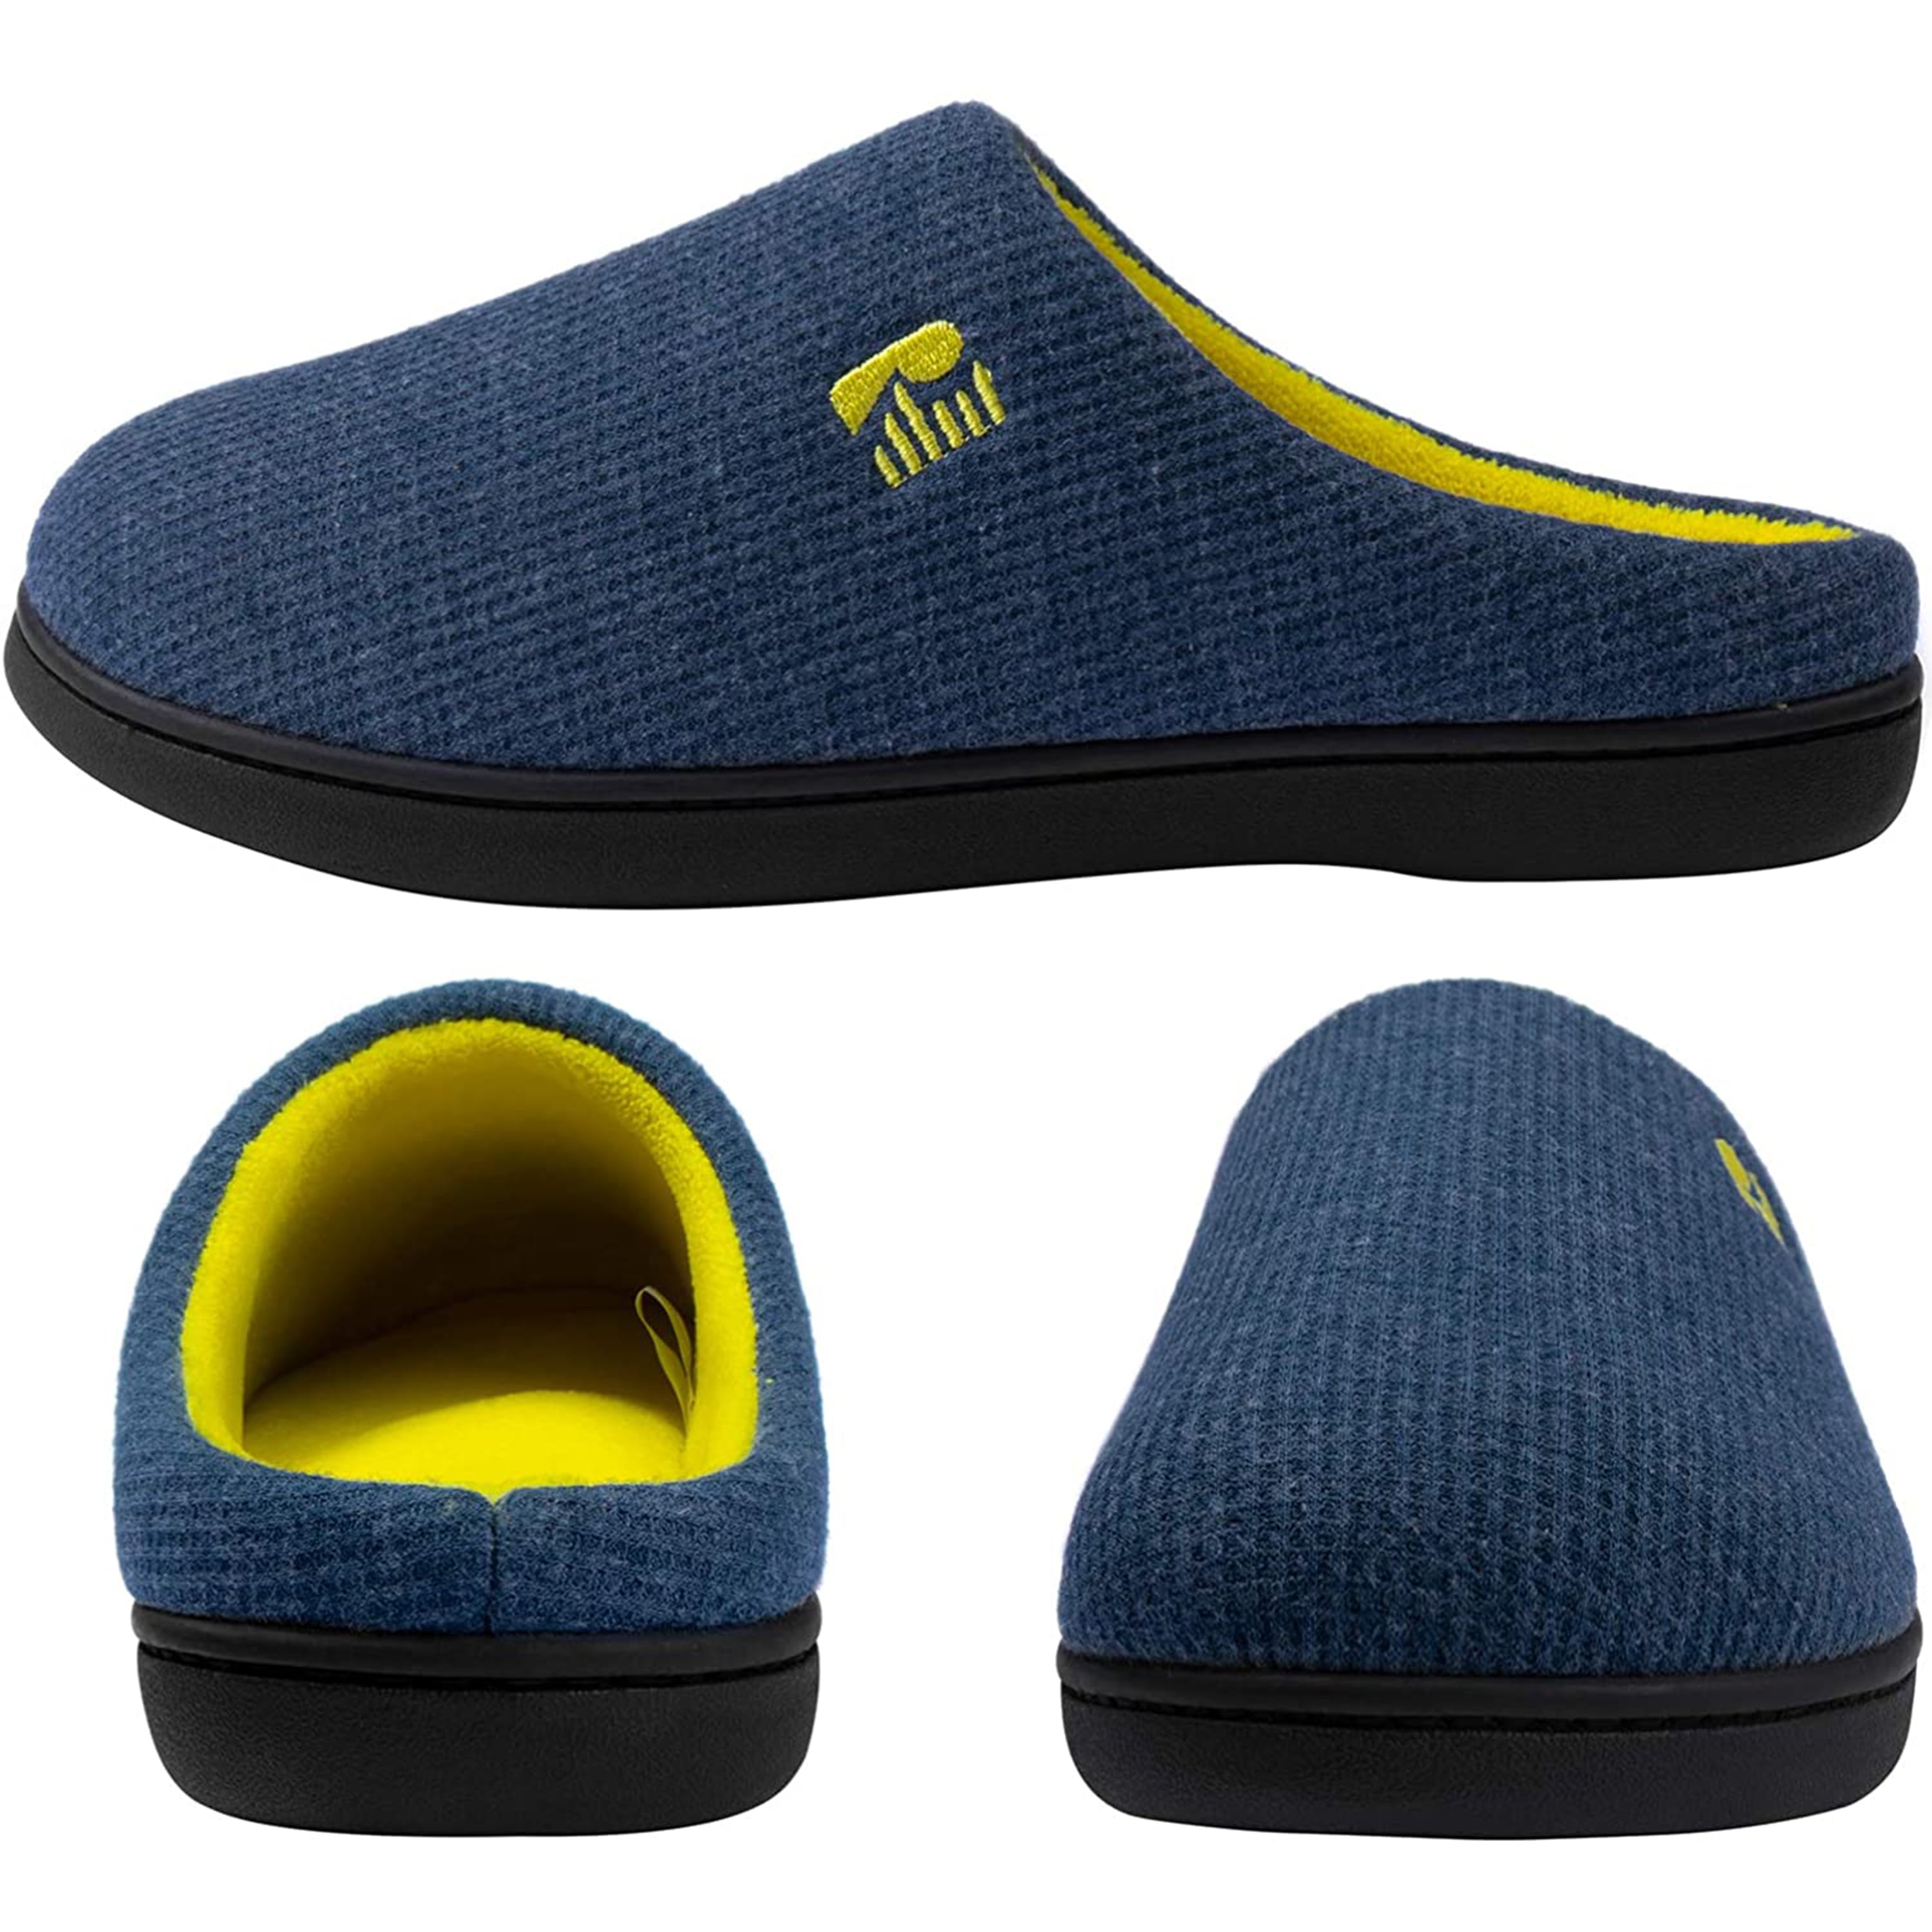 M EMIRO FLIP FLOP - Mosser Shoes